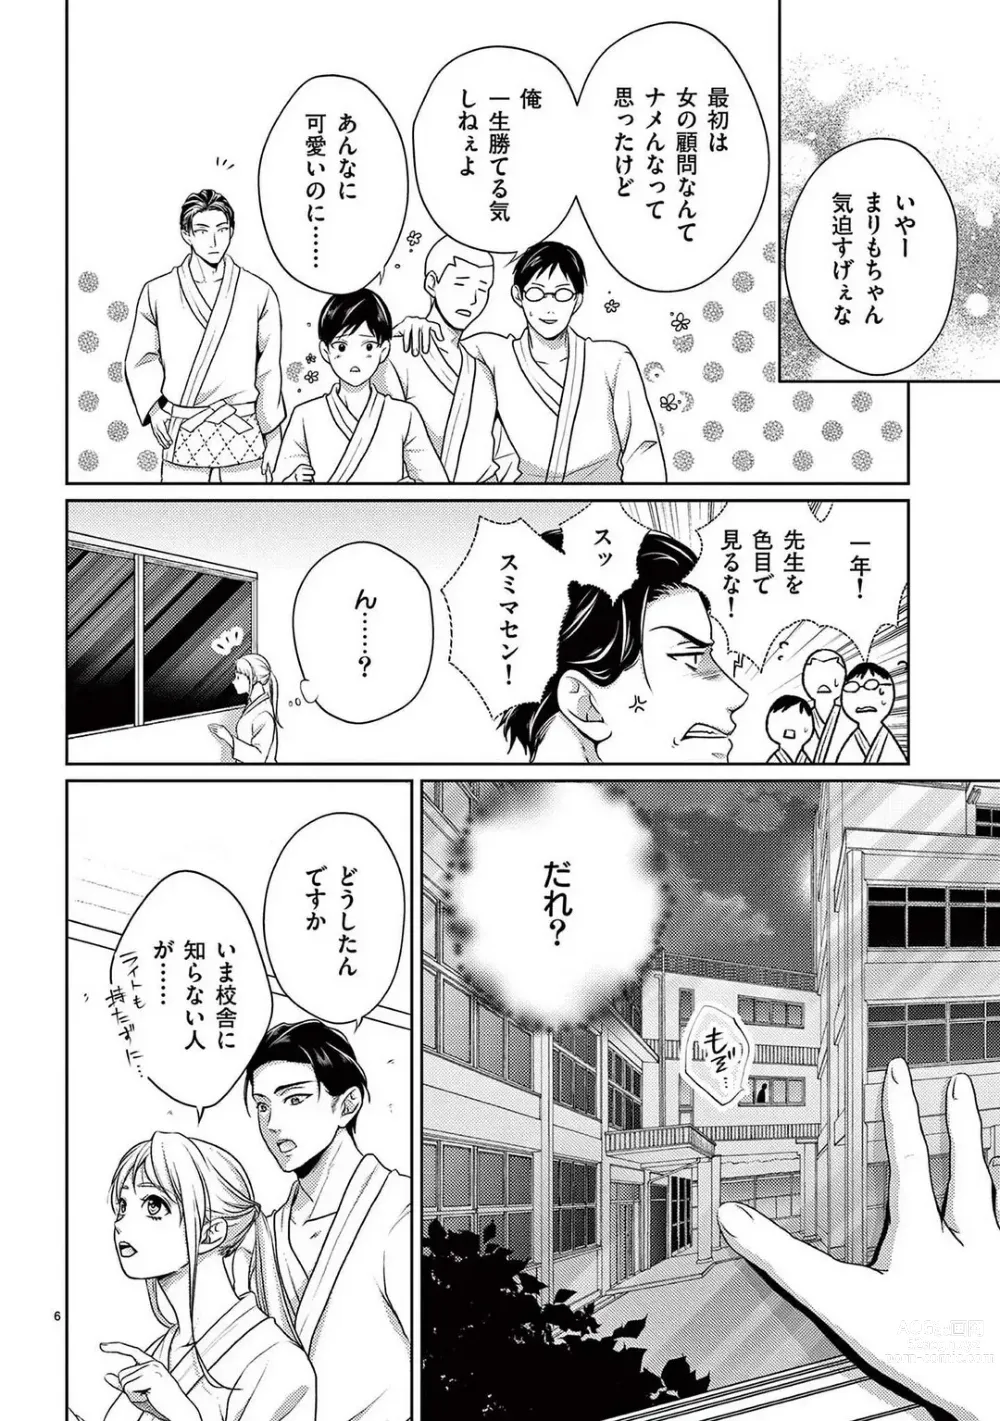 Page 7 of manga Sono Ase, Sekkusu Pafuyūmu. 〜 Sutte, Kisushite, Musabotte~Chp.1-7